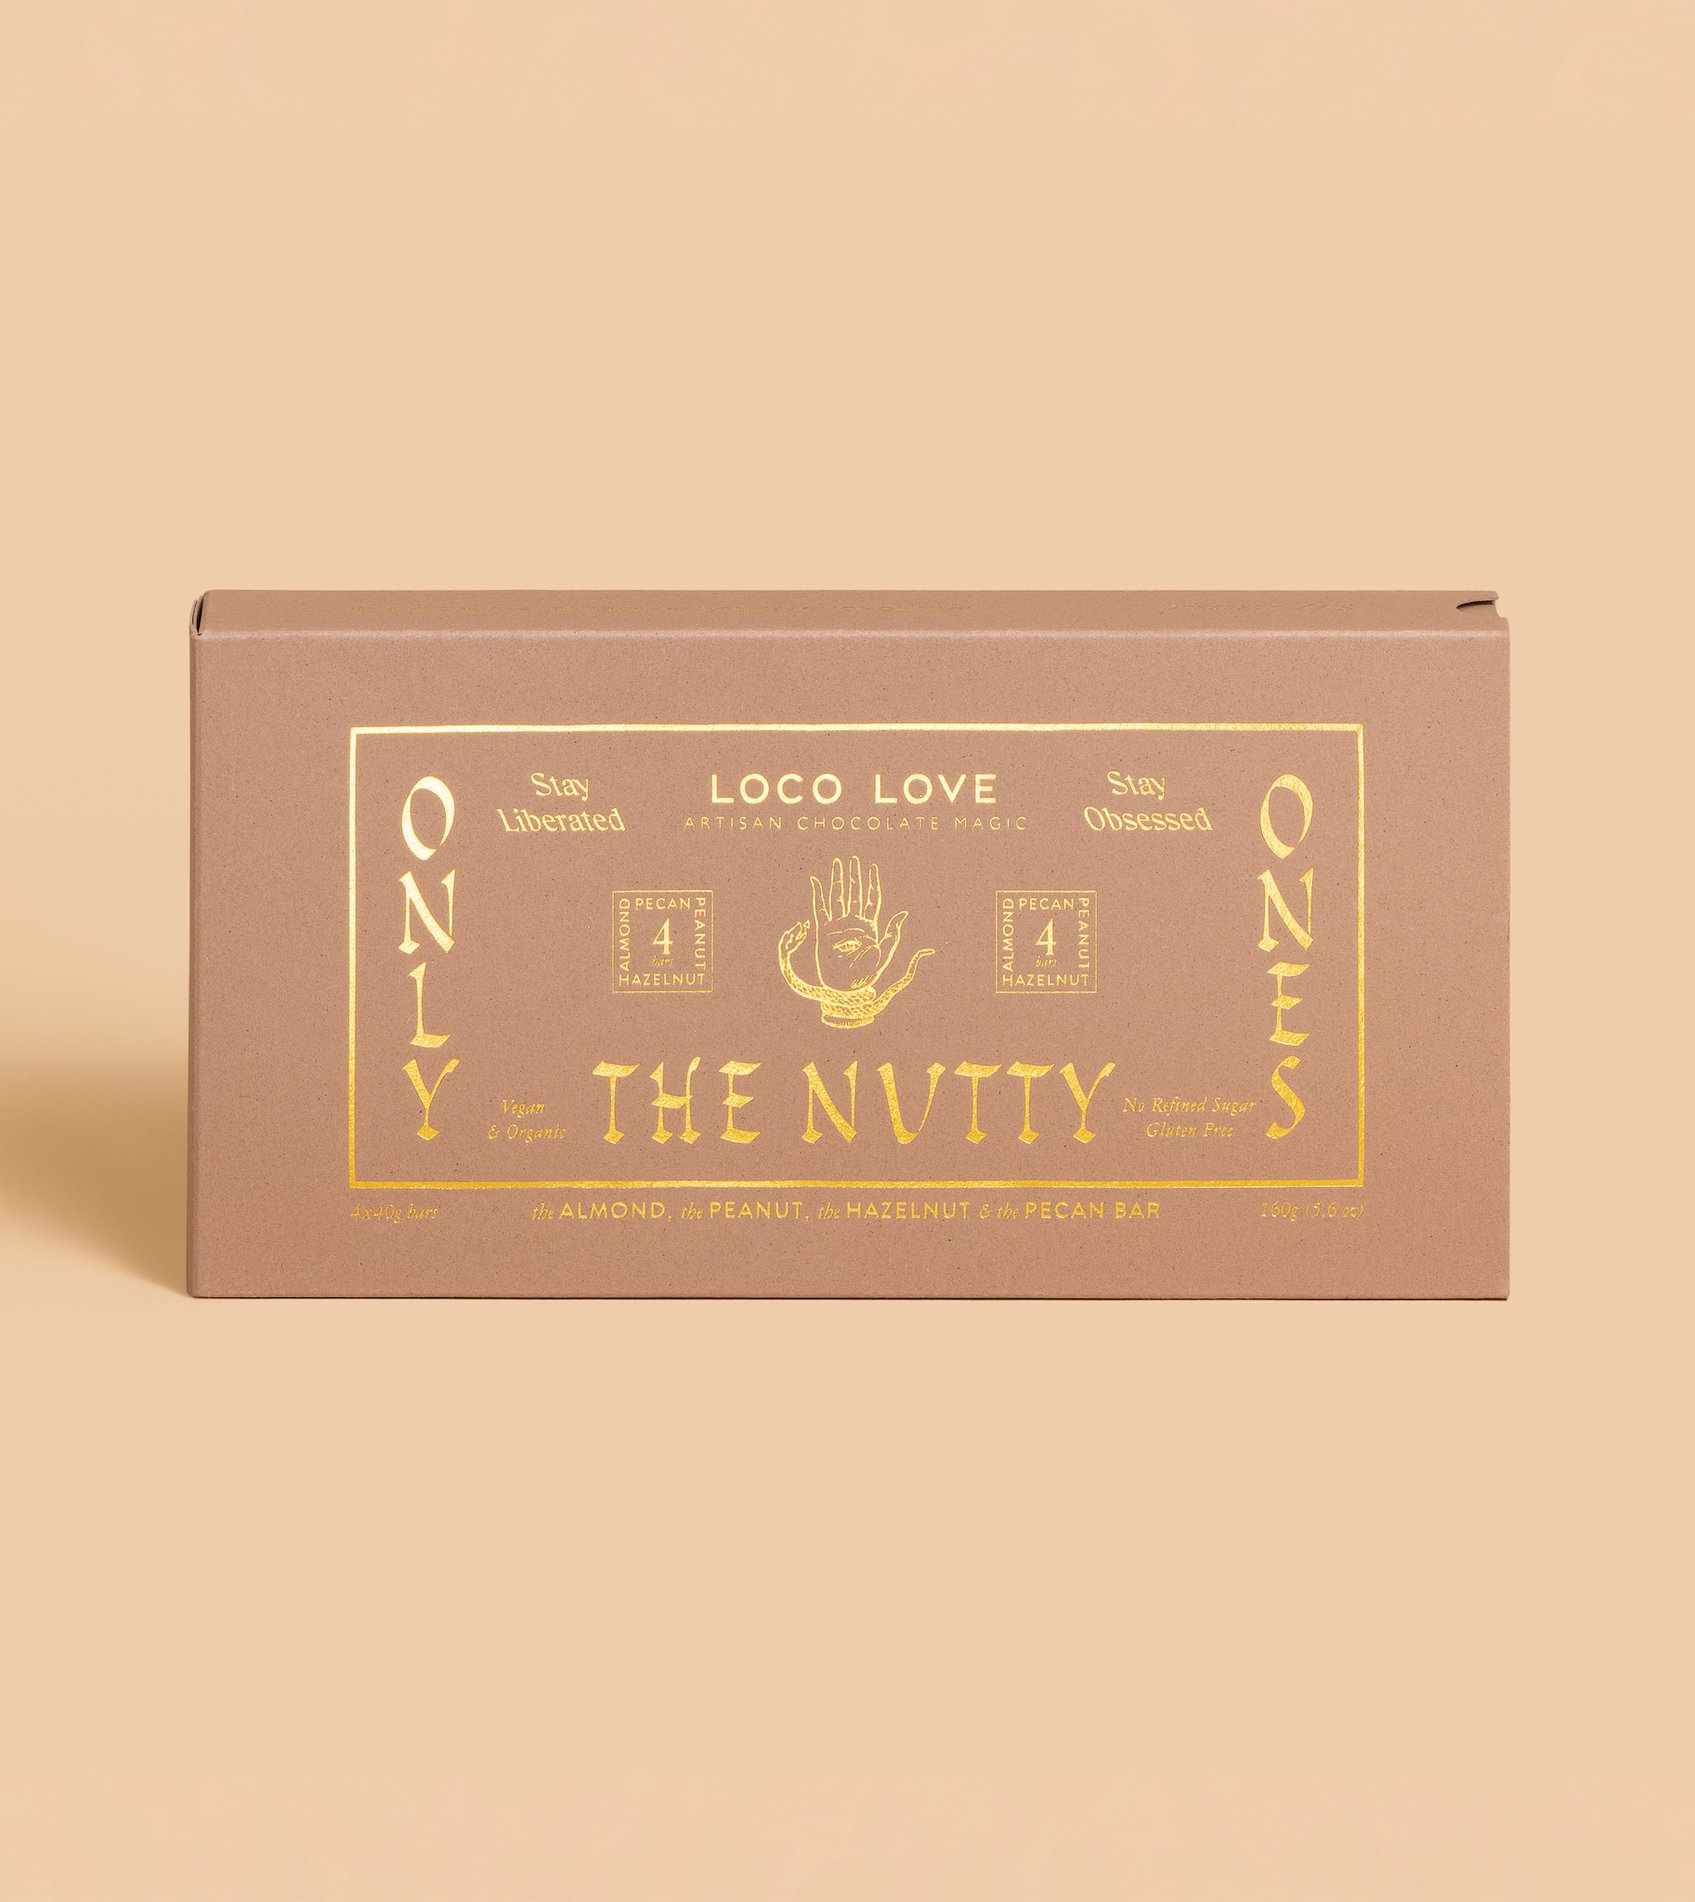 Loco Love Chocolate The Nutty One's Gift Box